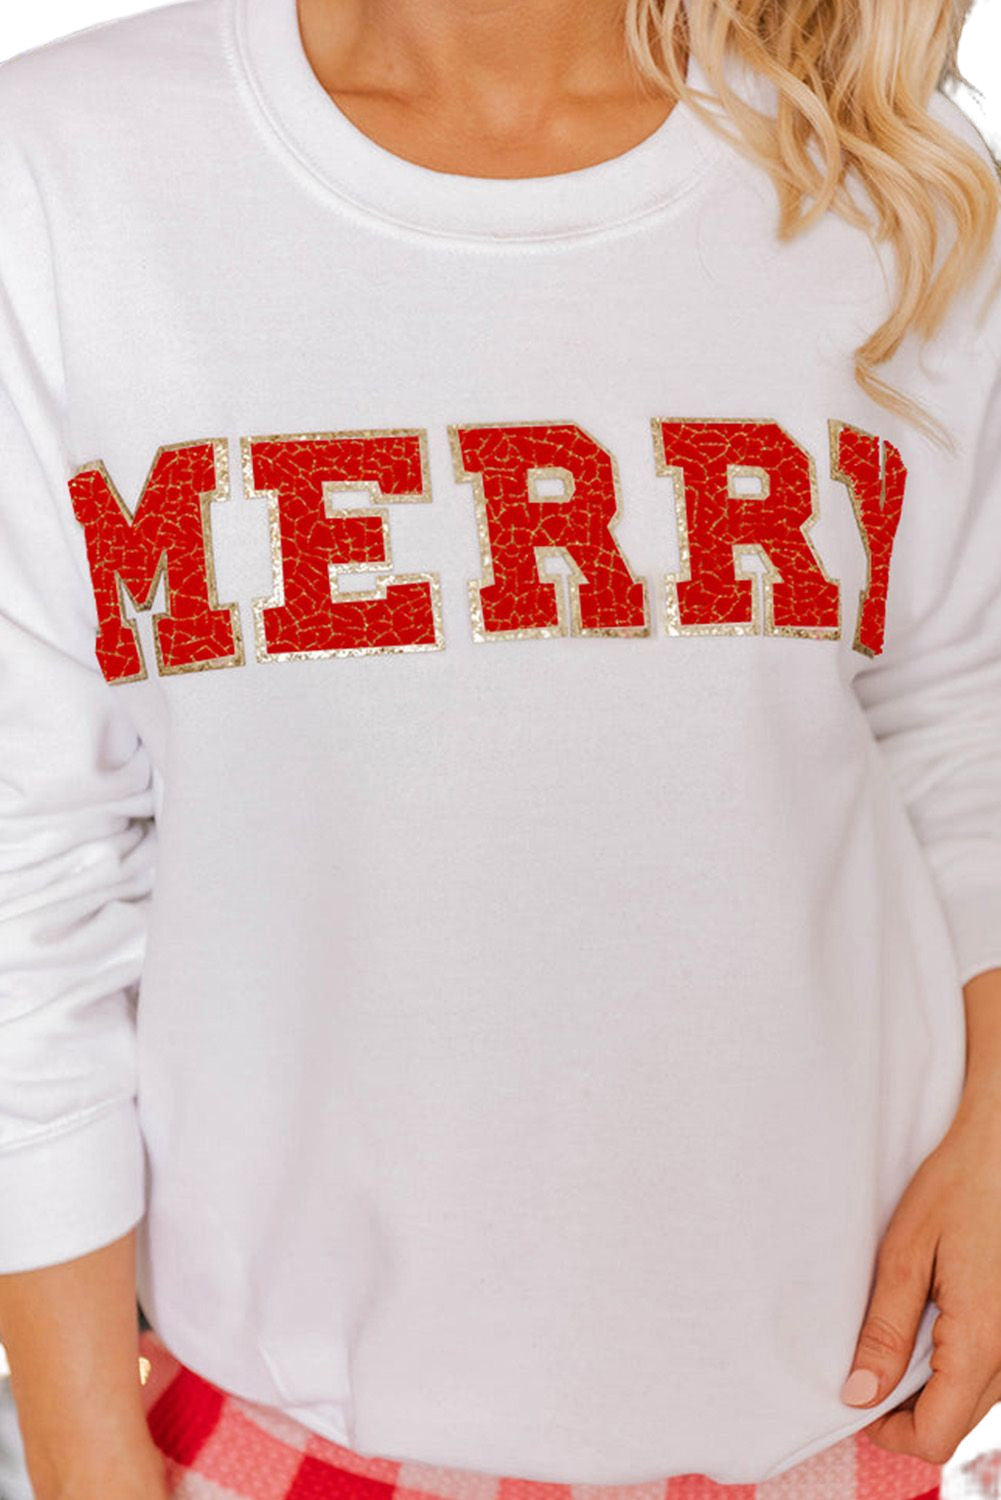 Merry Graphic Pullover Sweatshirt